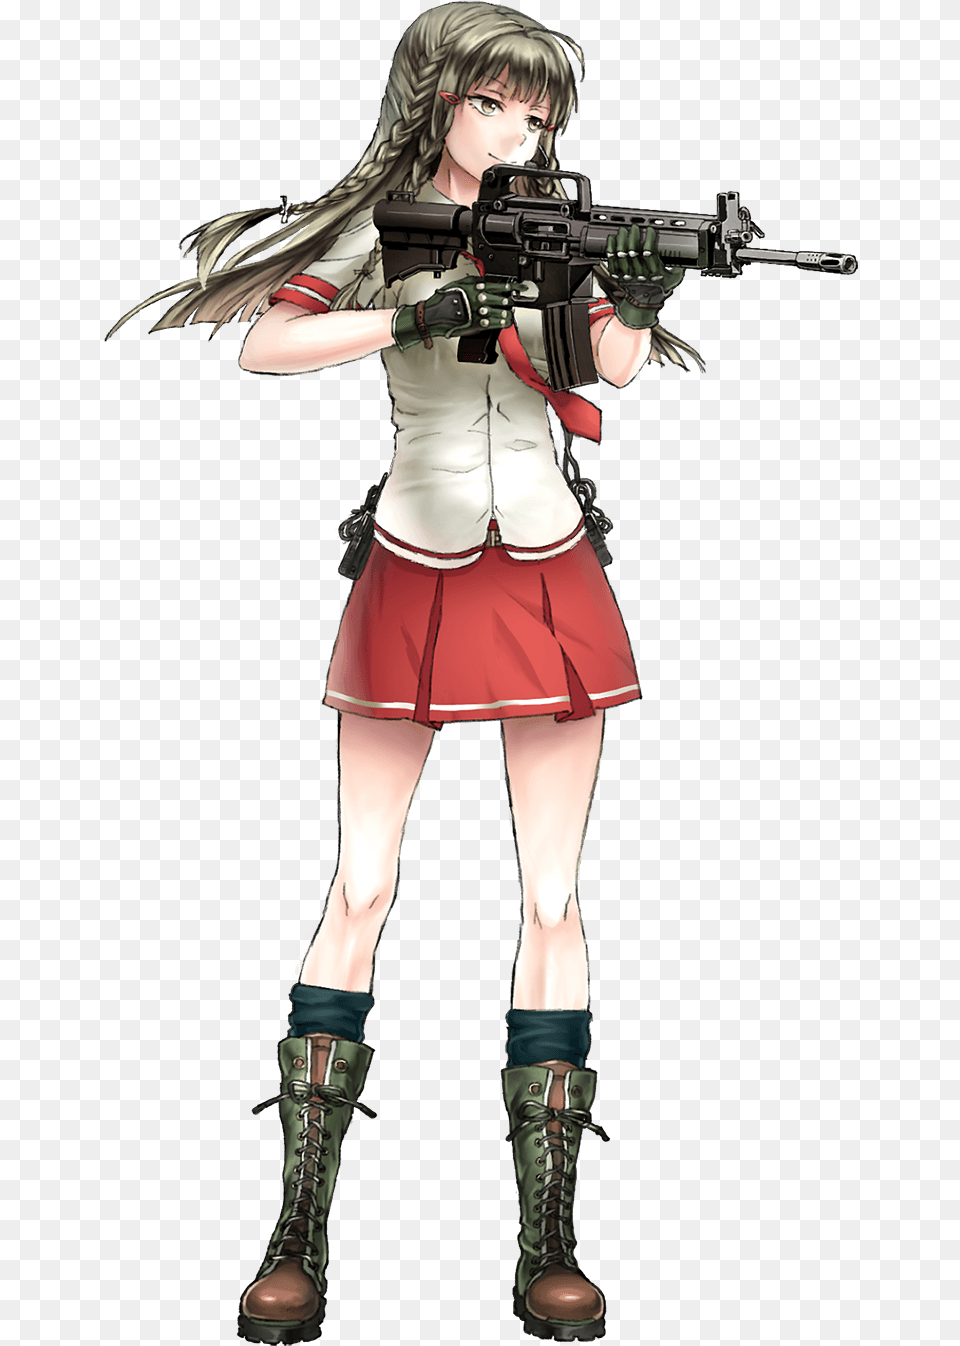 Cartoon Girl Shooting Gun Anime Girl Shooting Gun, Weapon, Clothing, Rifle, Costume Free Png